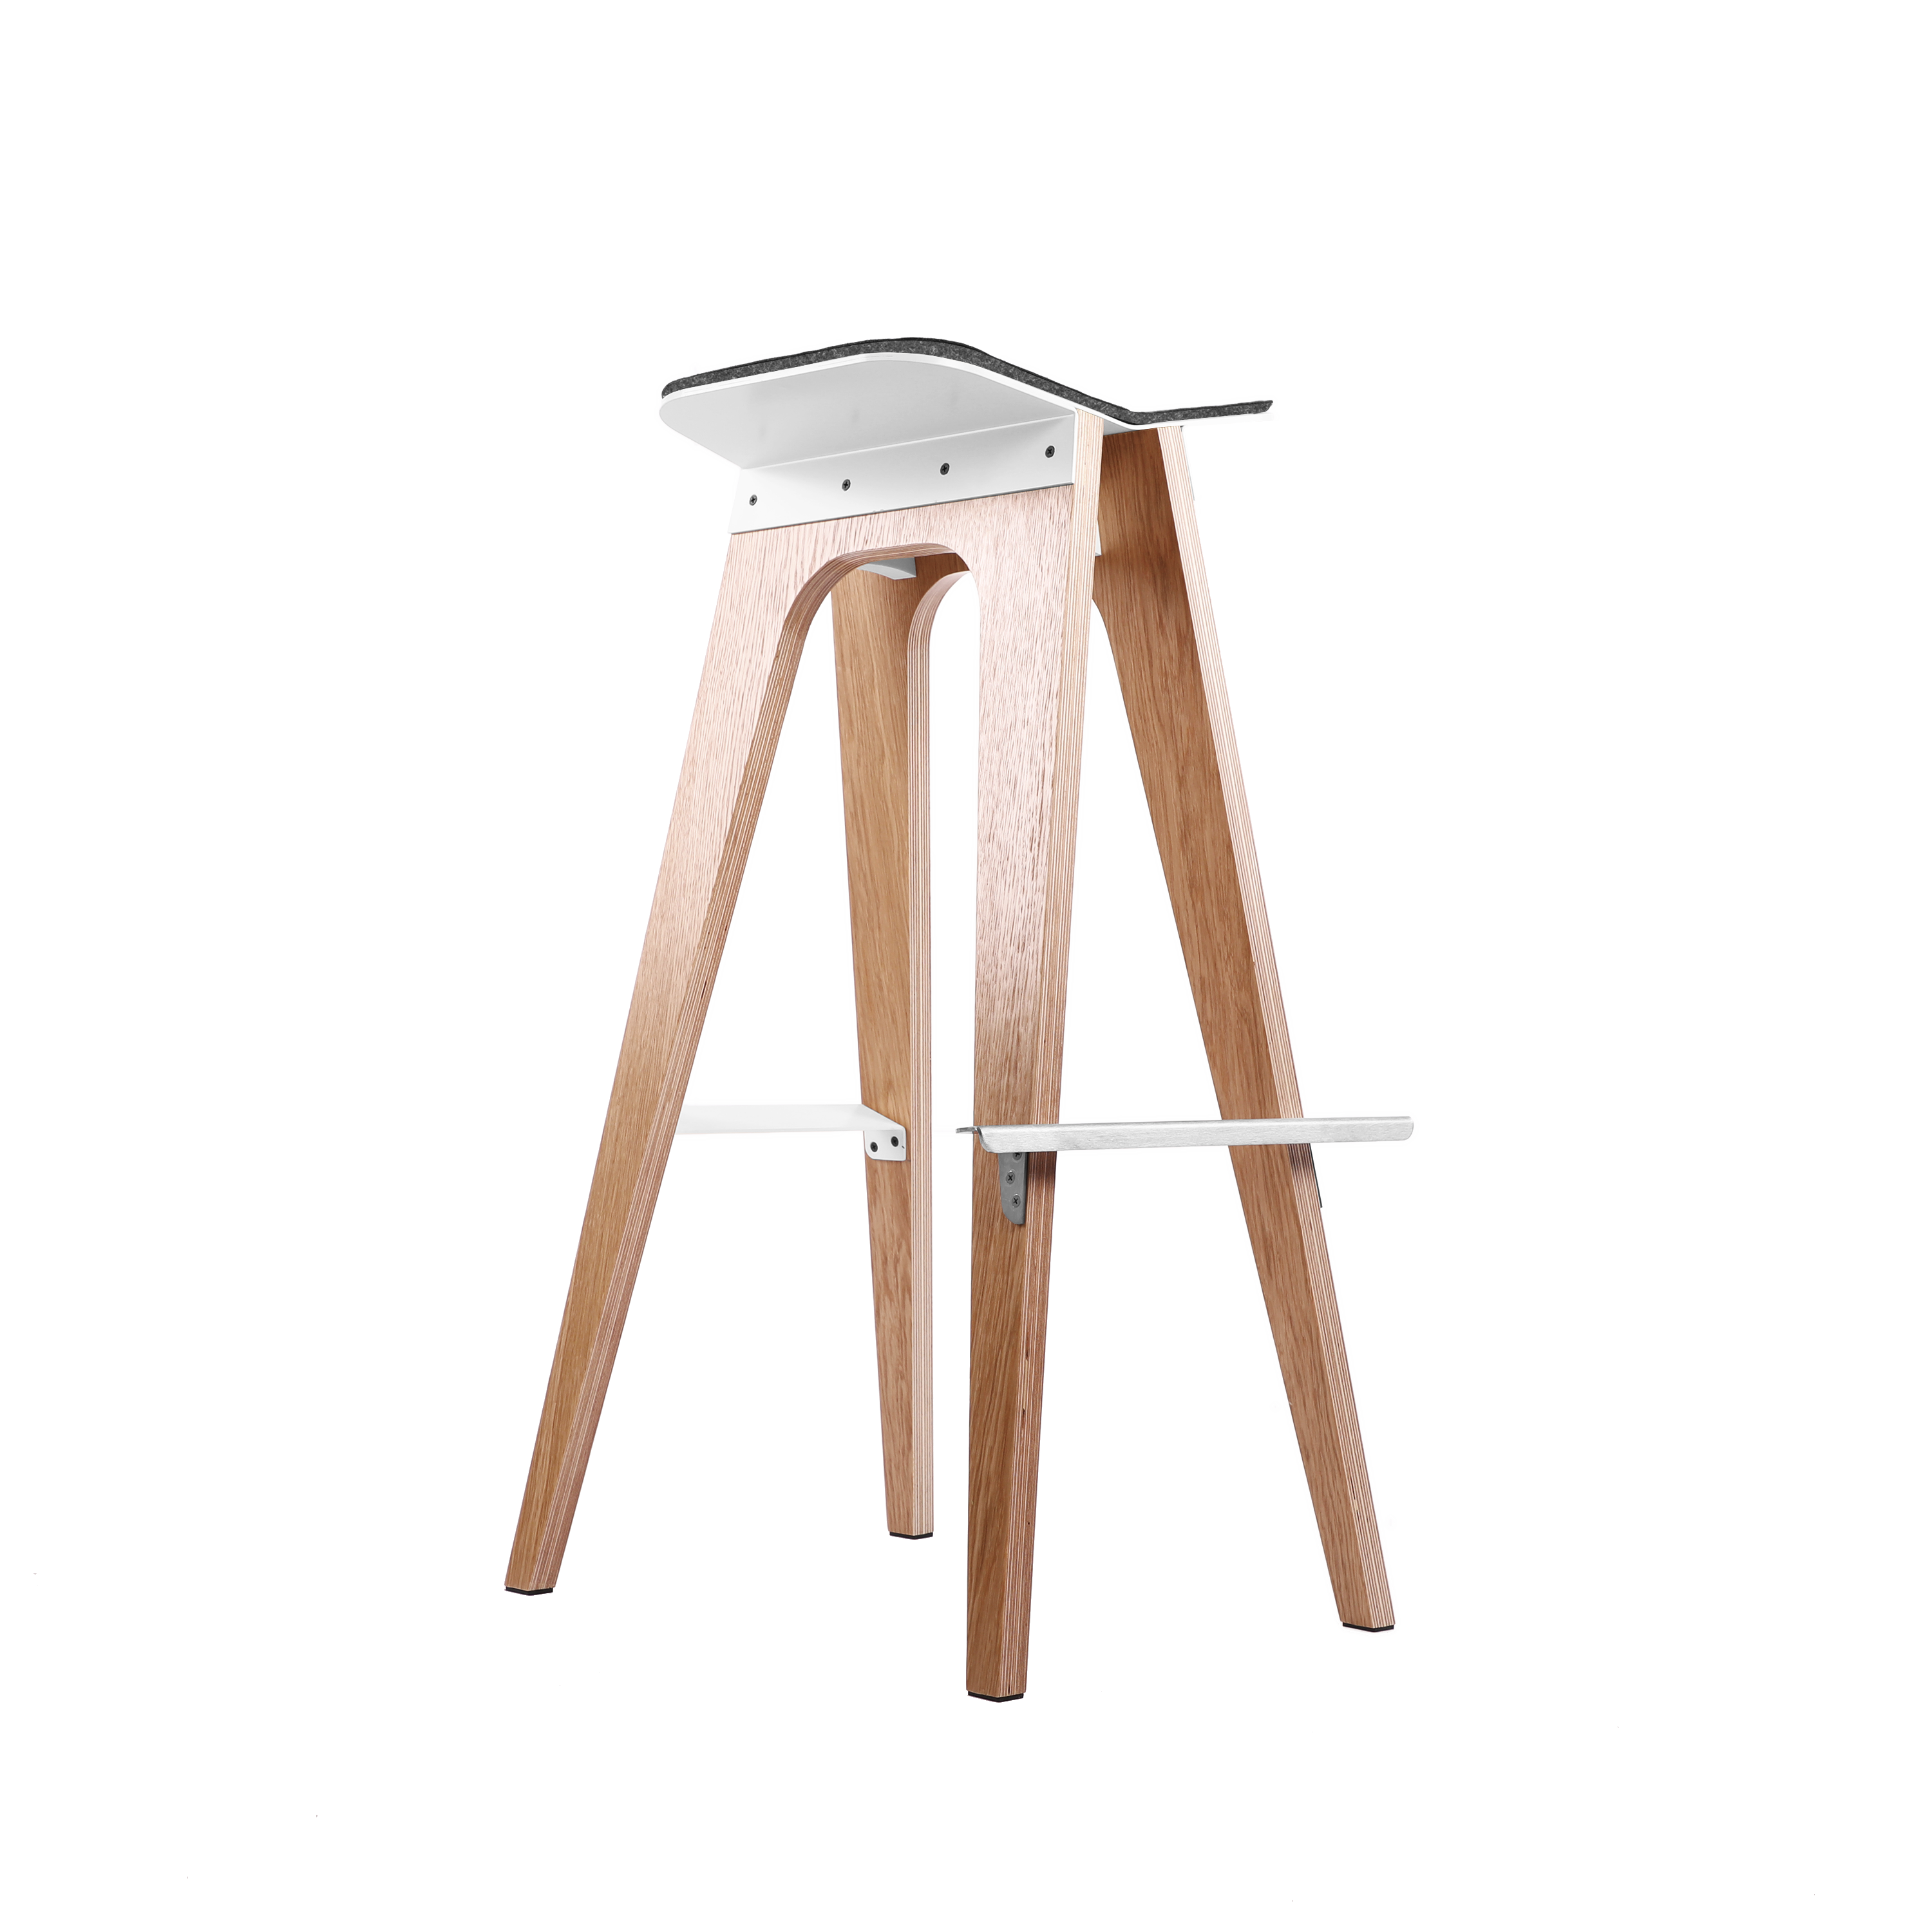 C5 bar stool